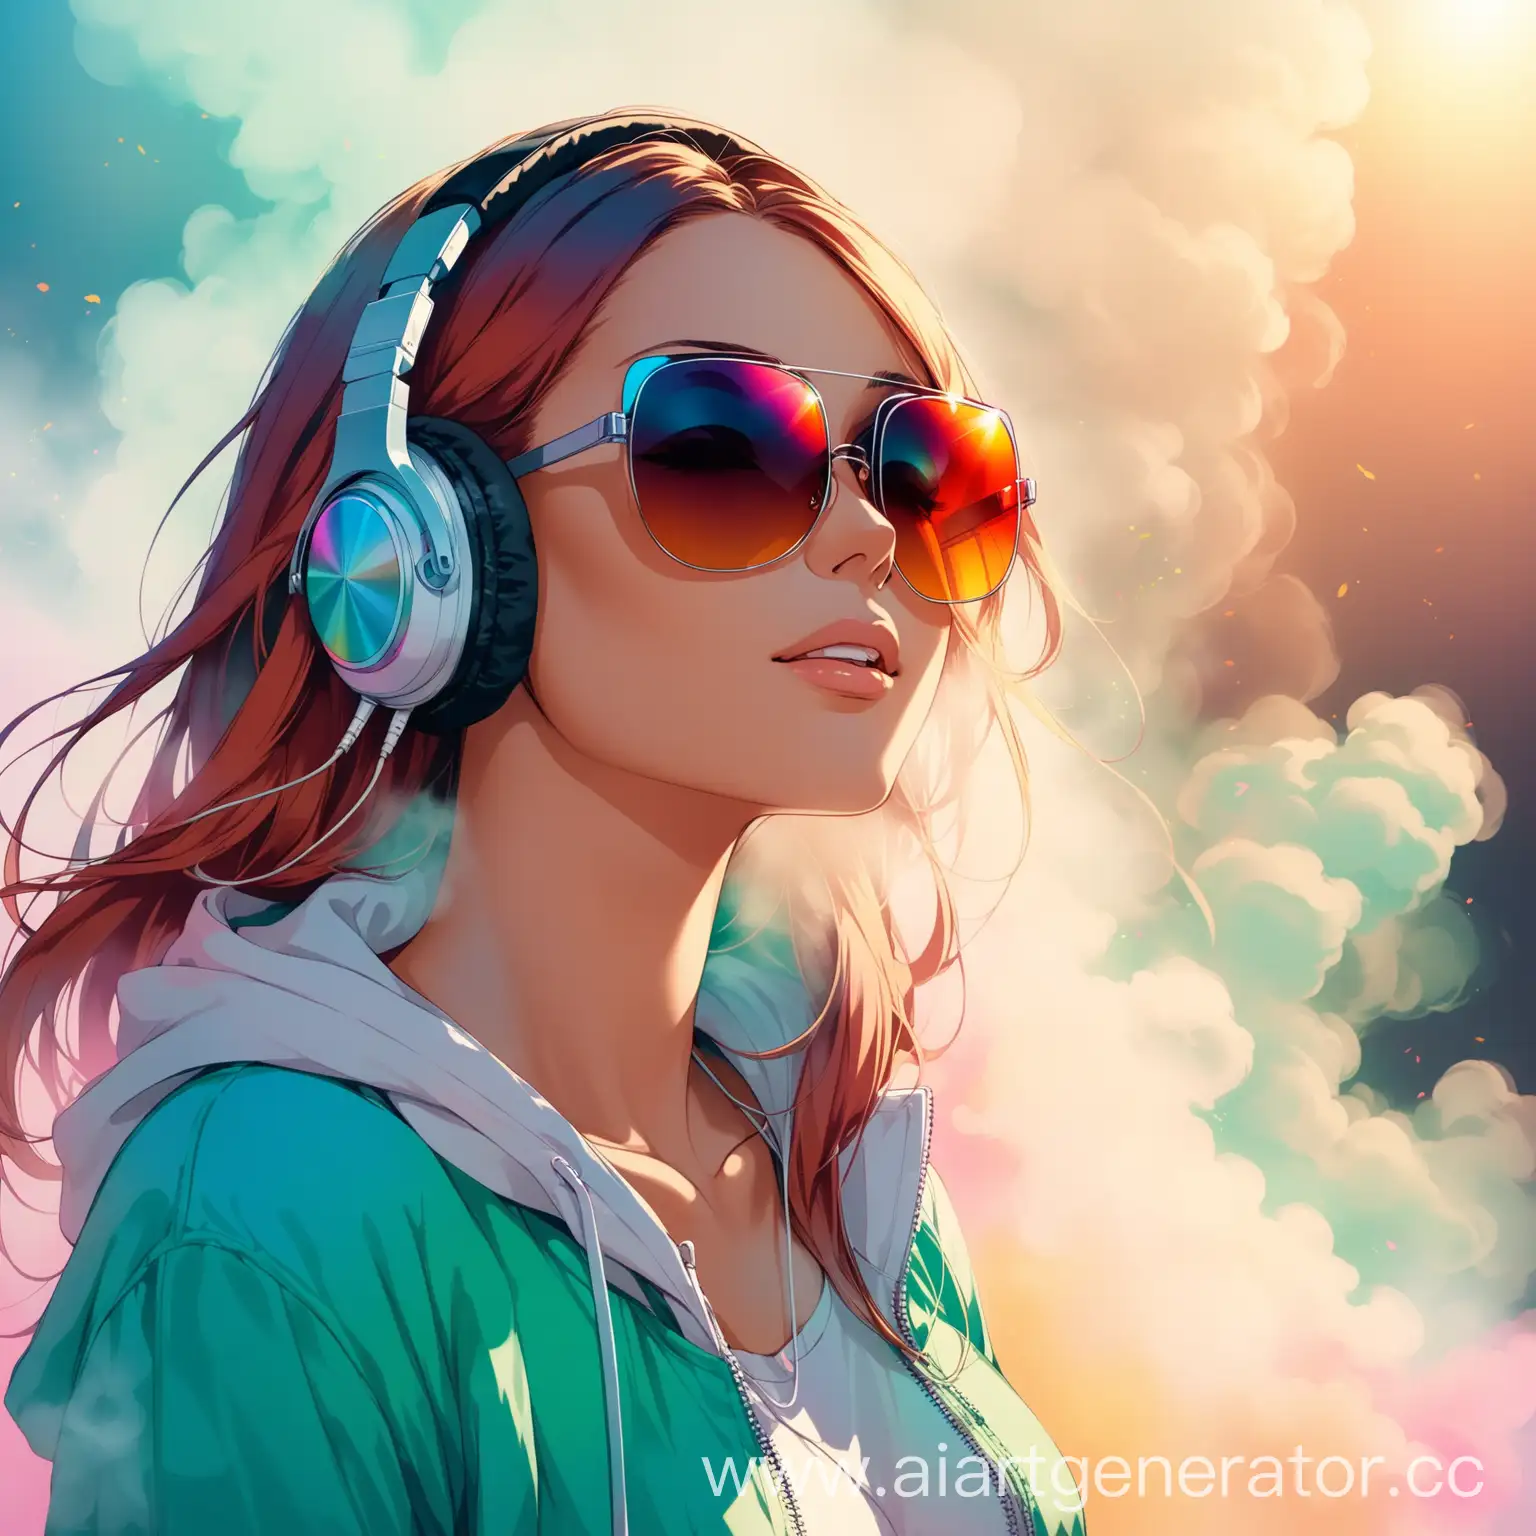 SunglassesWearing-Girl-Delights-in-Music-amidst-Vibrant-Surroundings-and-Smoke